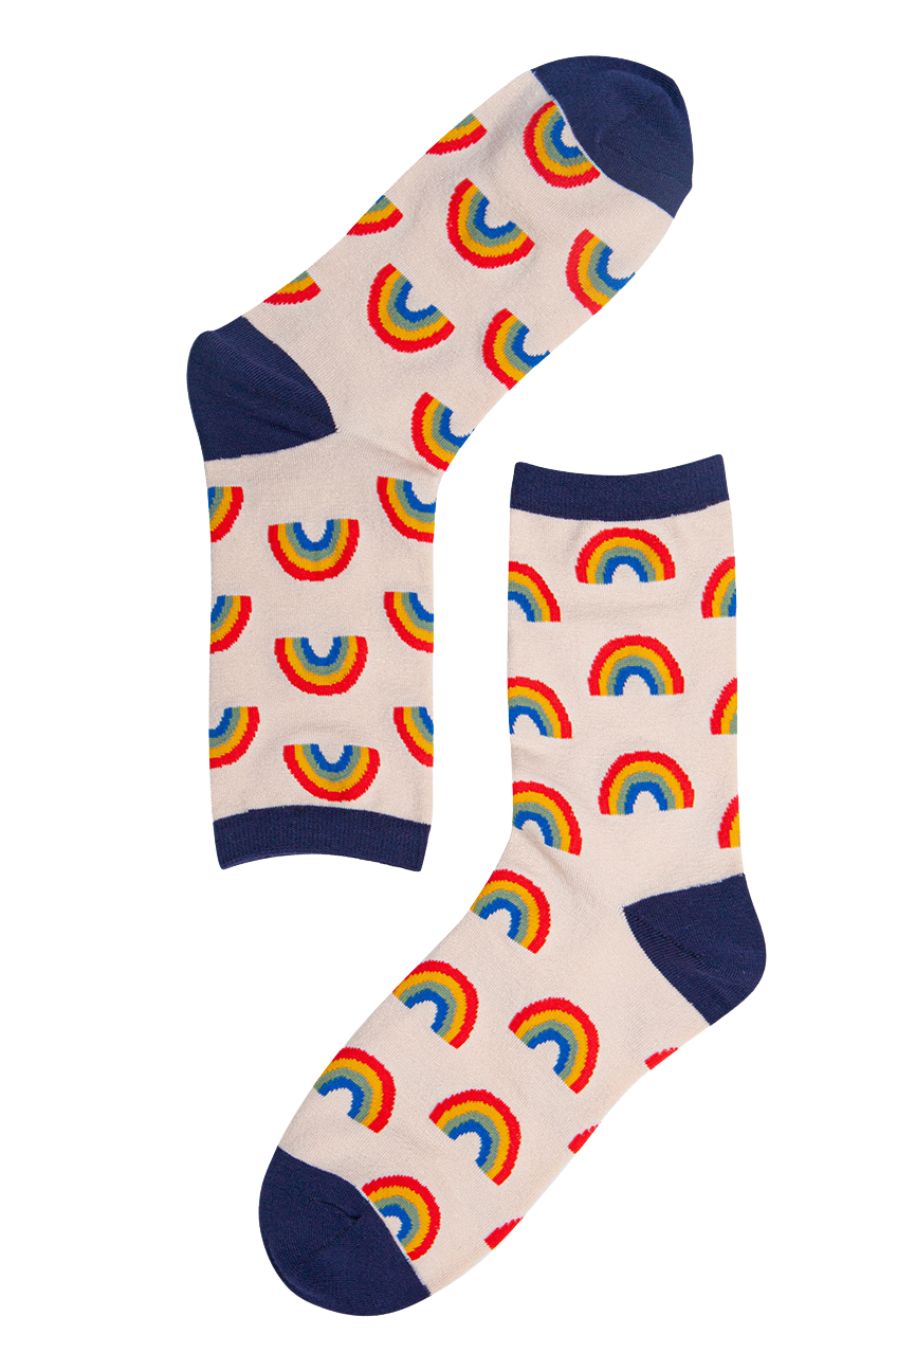 cream, navy blue rainbow pattern bamboo socks